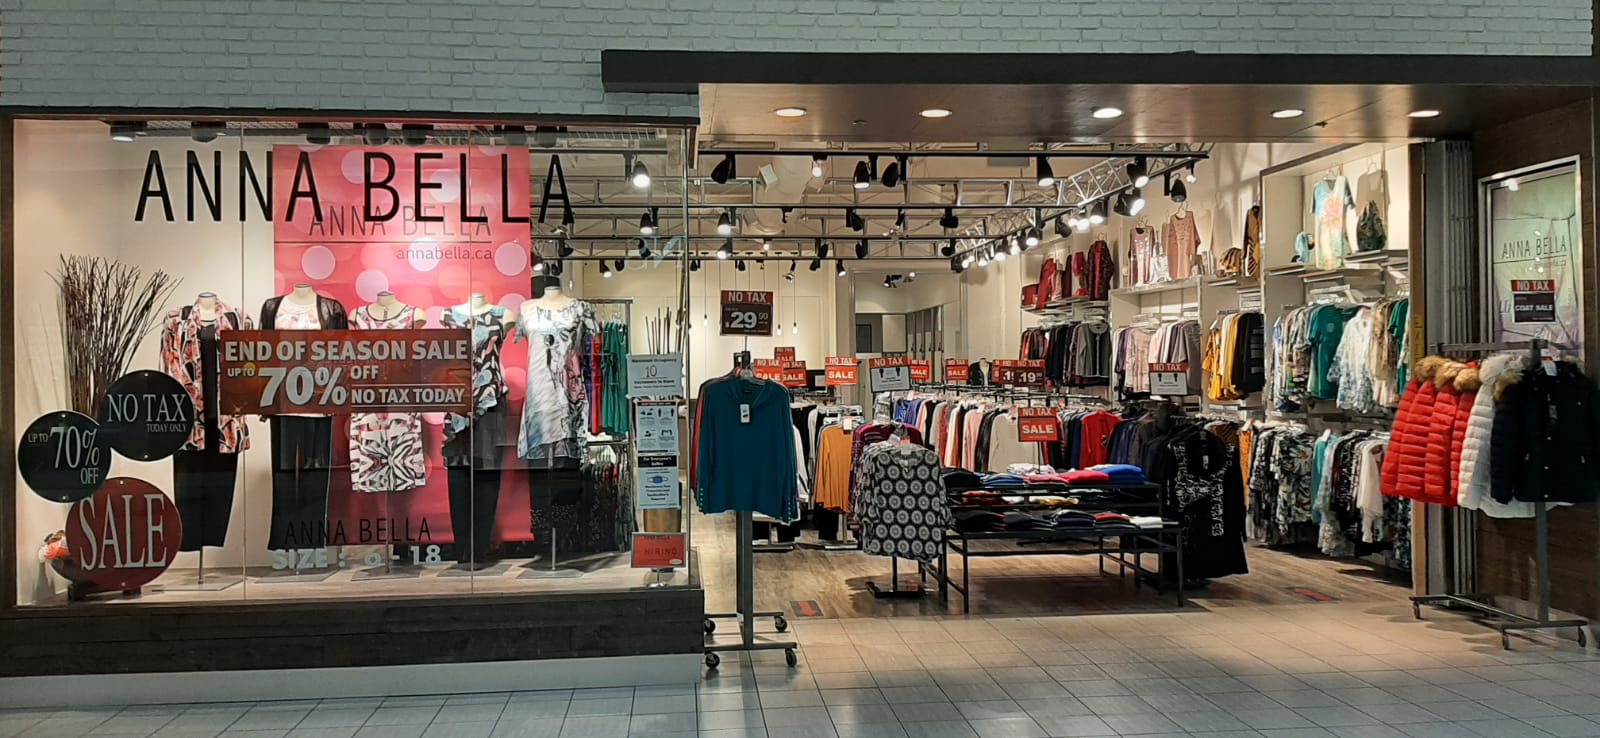 Anna Bella - Fashion Retailer